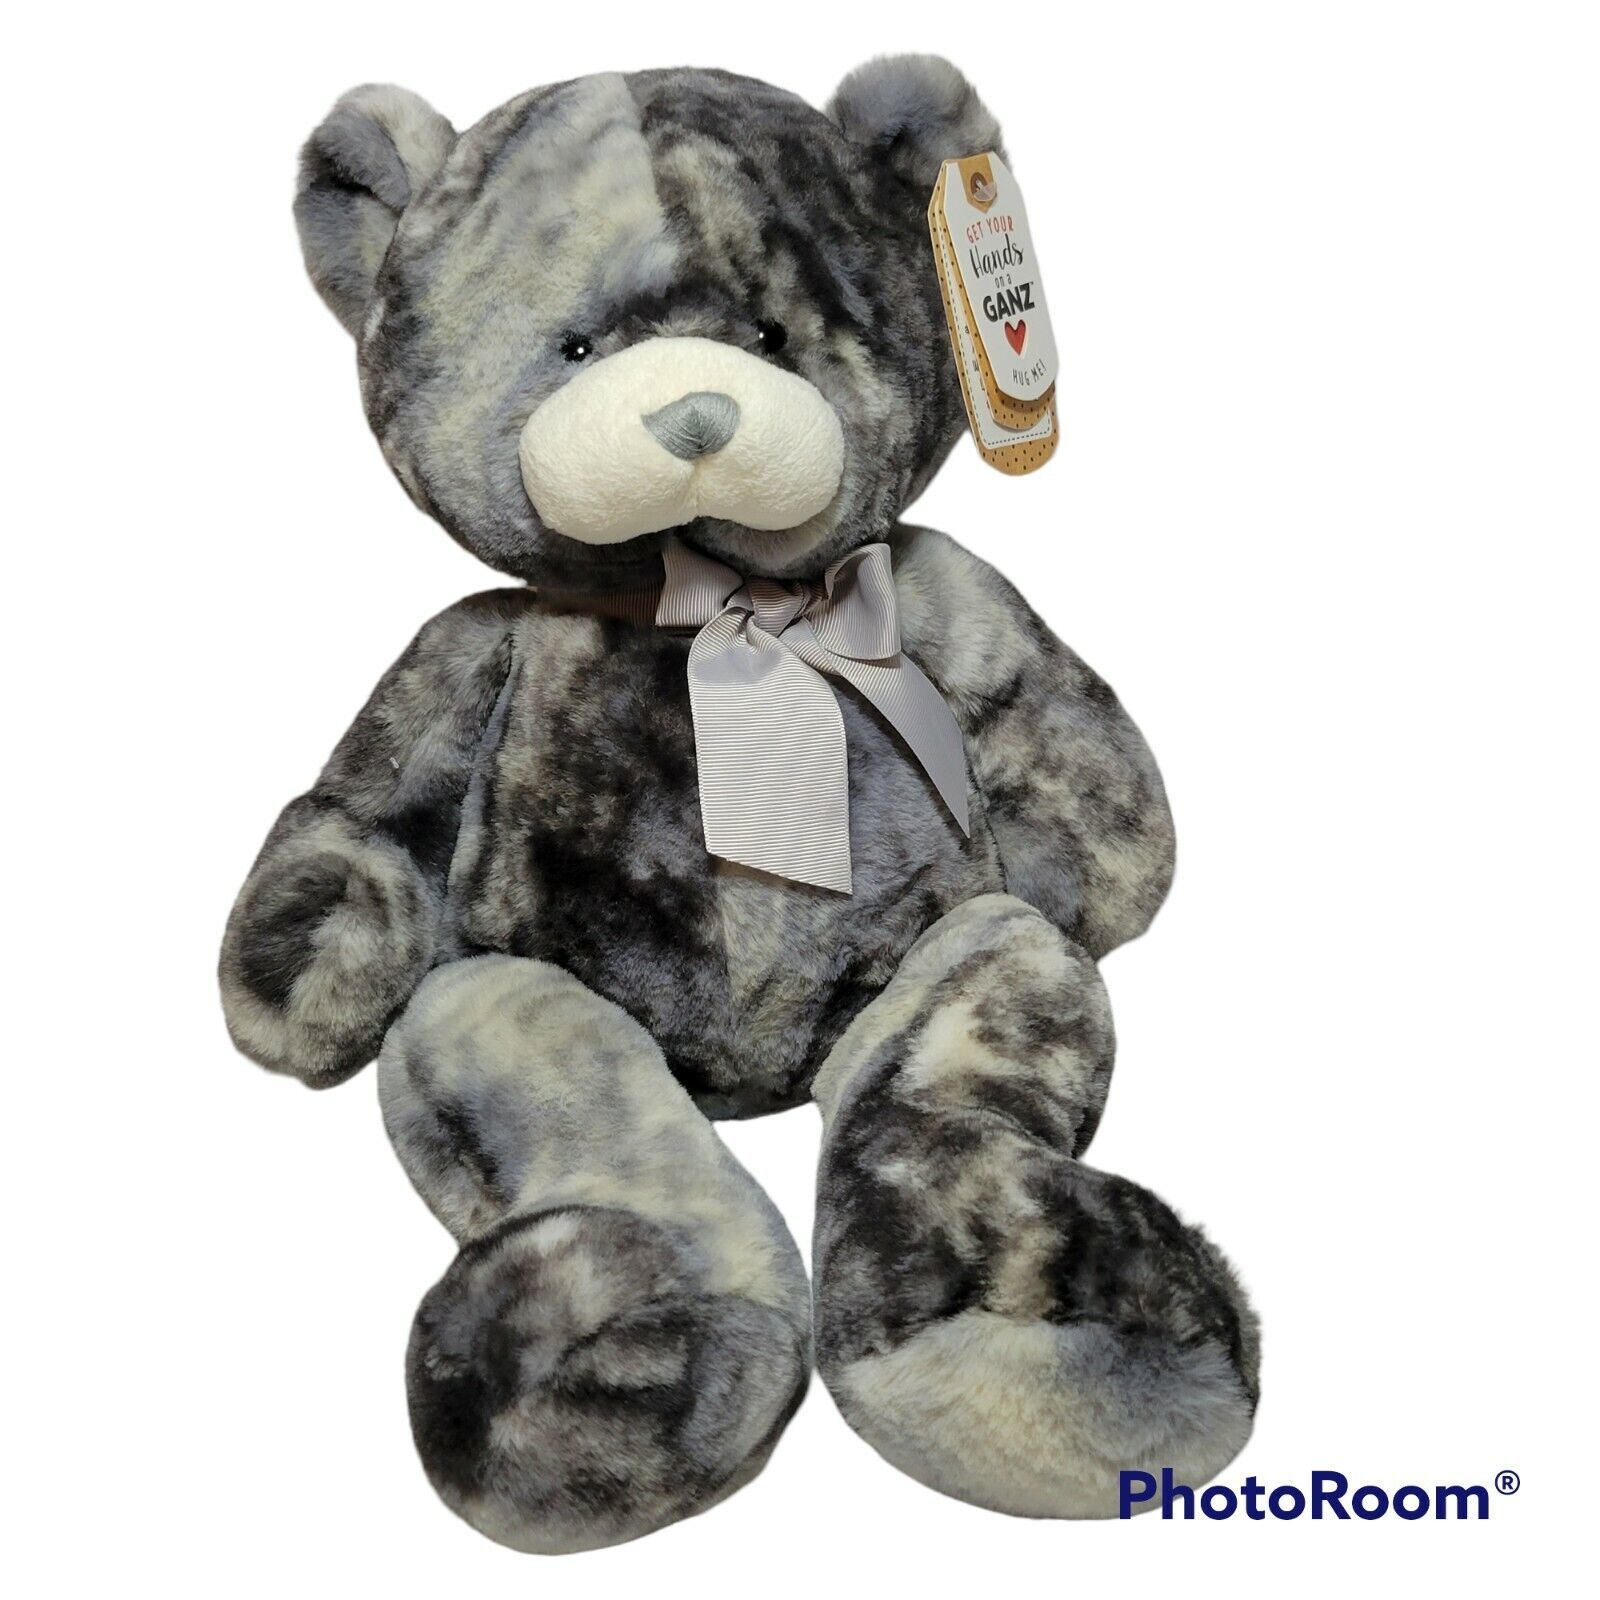 Hands On A Ganz Teddy Bear Plush 16" Smudge Stuffed Animal Super Soft Toy GUC  - $34.64